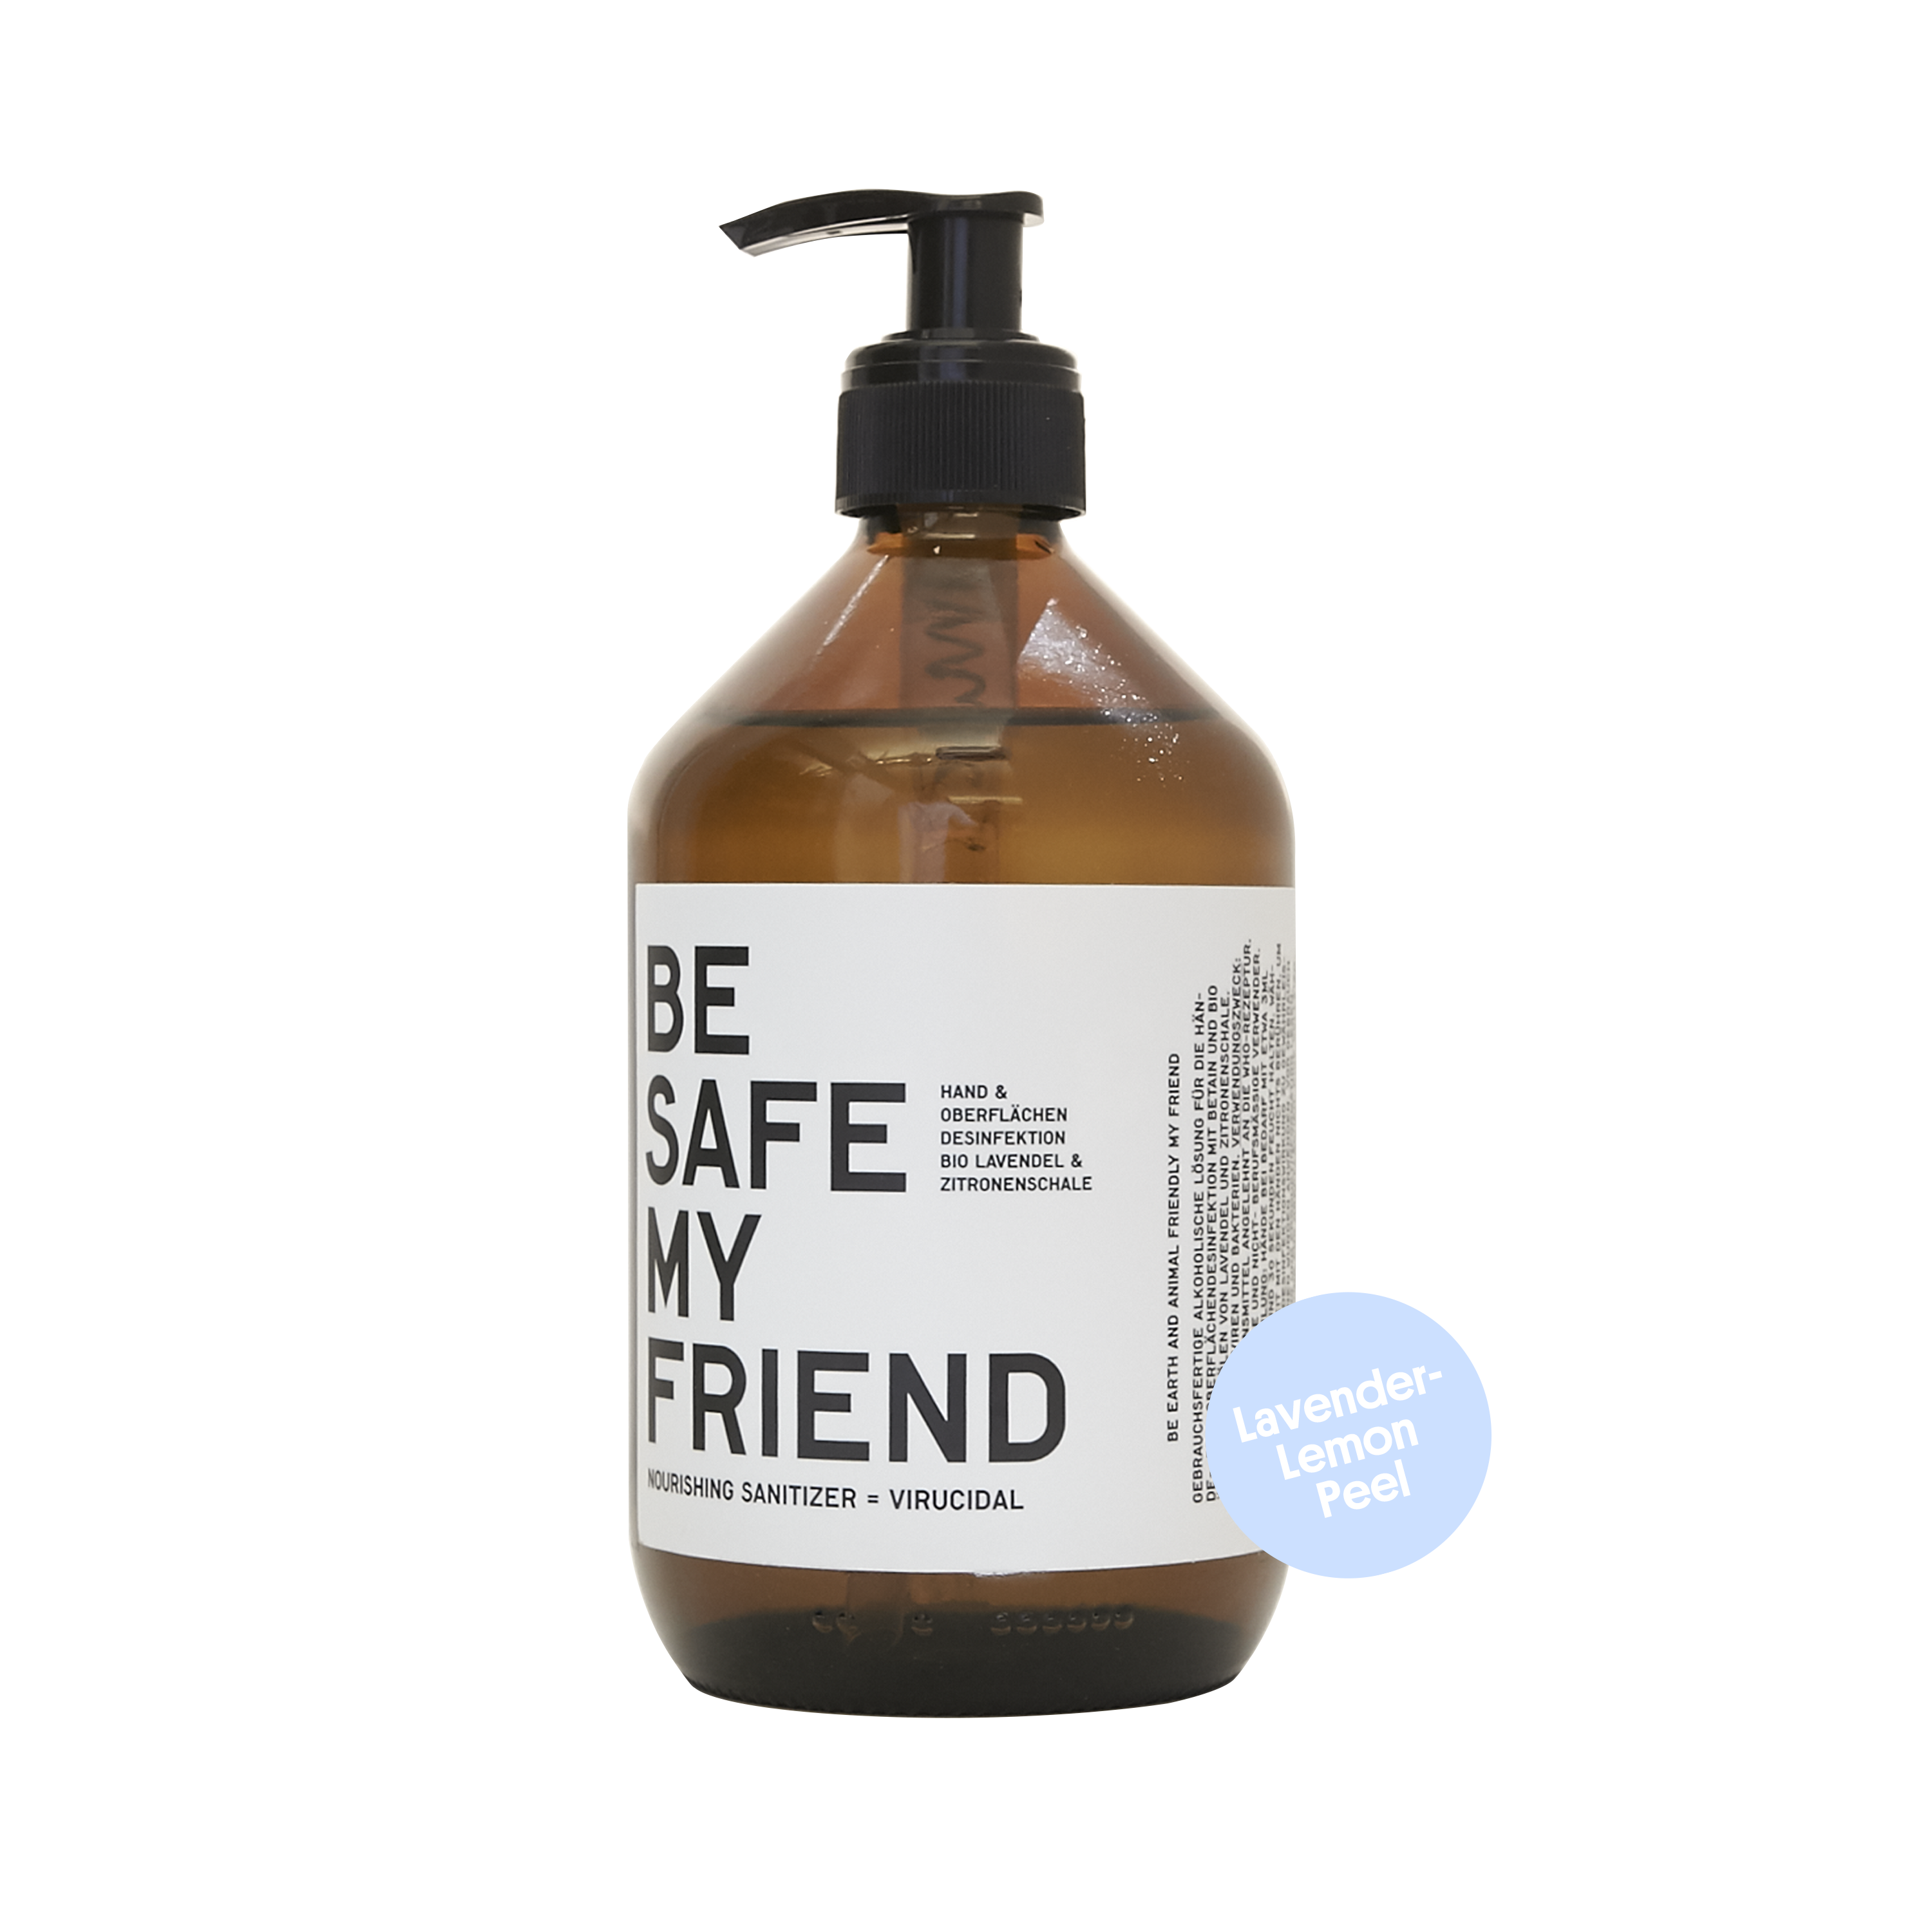 Sanitizer Spray - organic Lavender-Lemon Peel 500 ml von BE [...] MY FRIEND